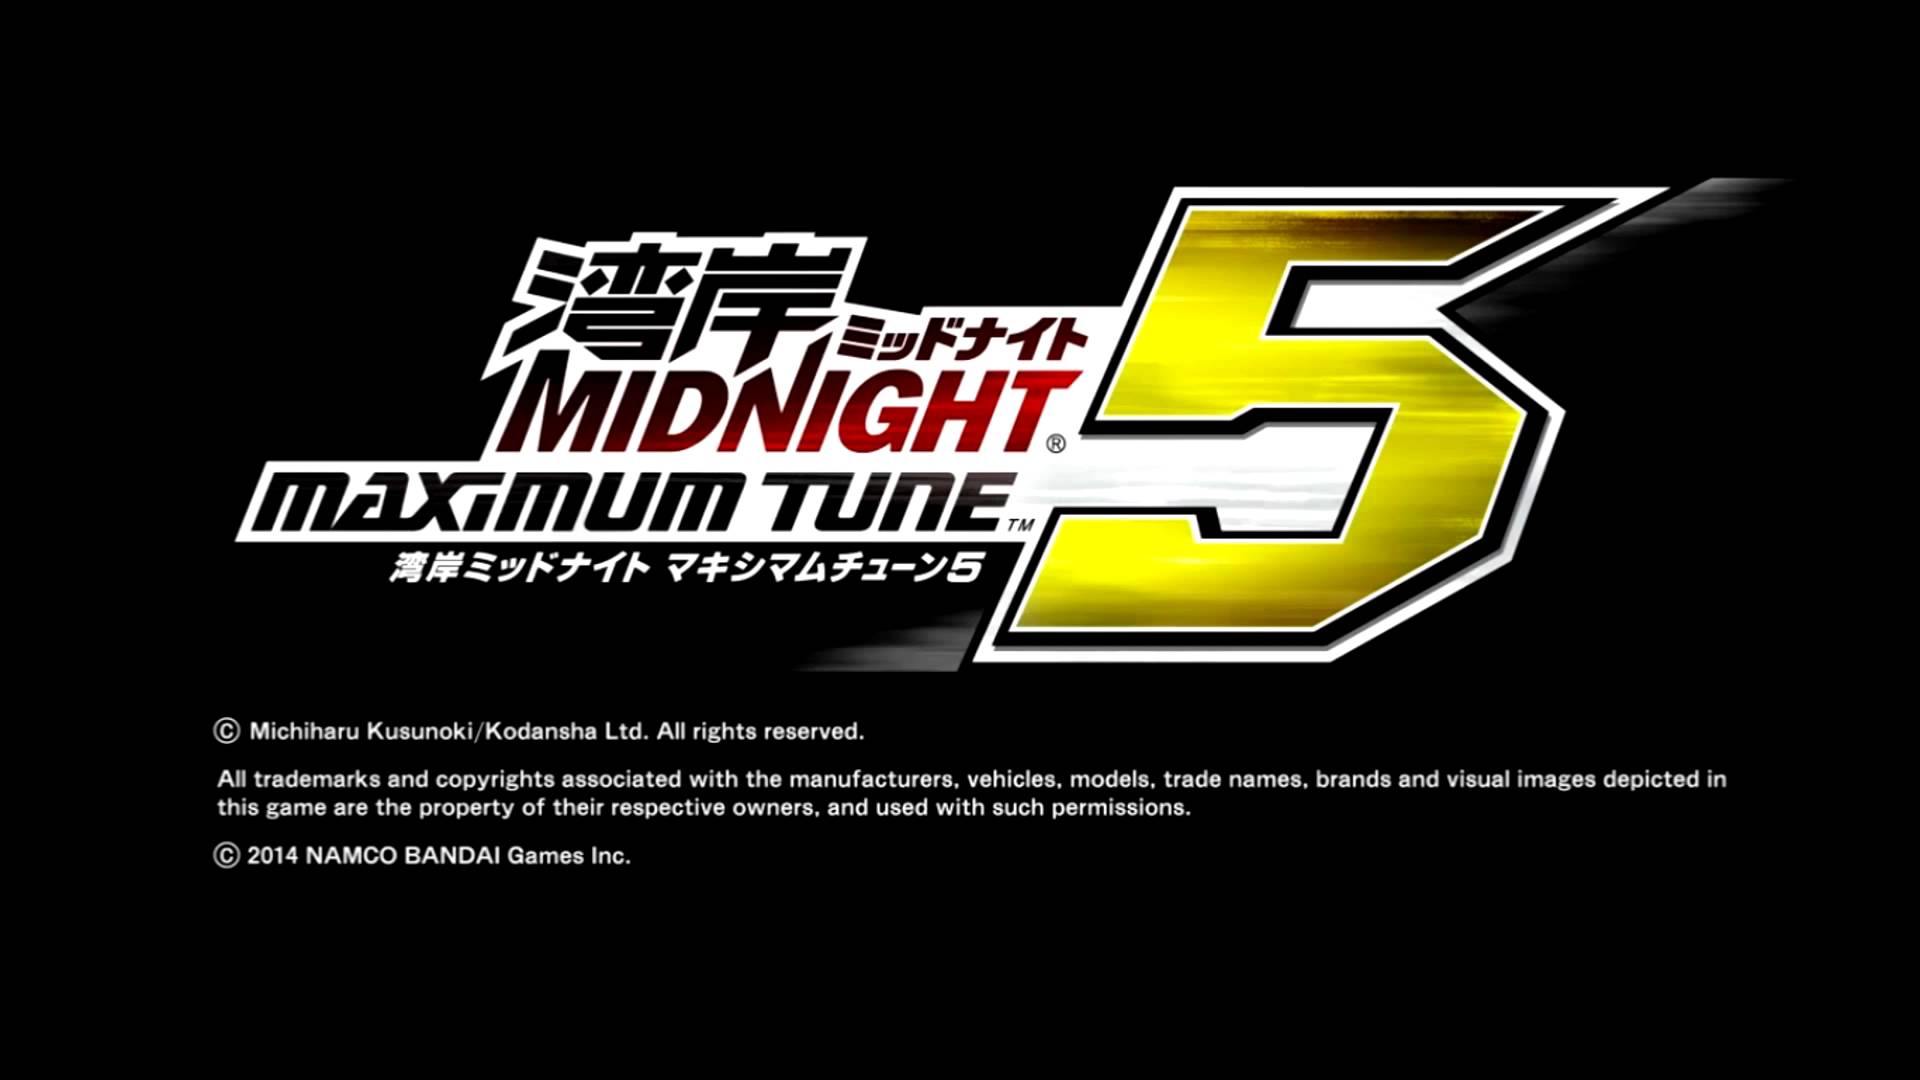 Tonight Midnight Maximum Tune 5 Soundtrack